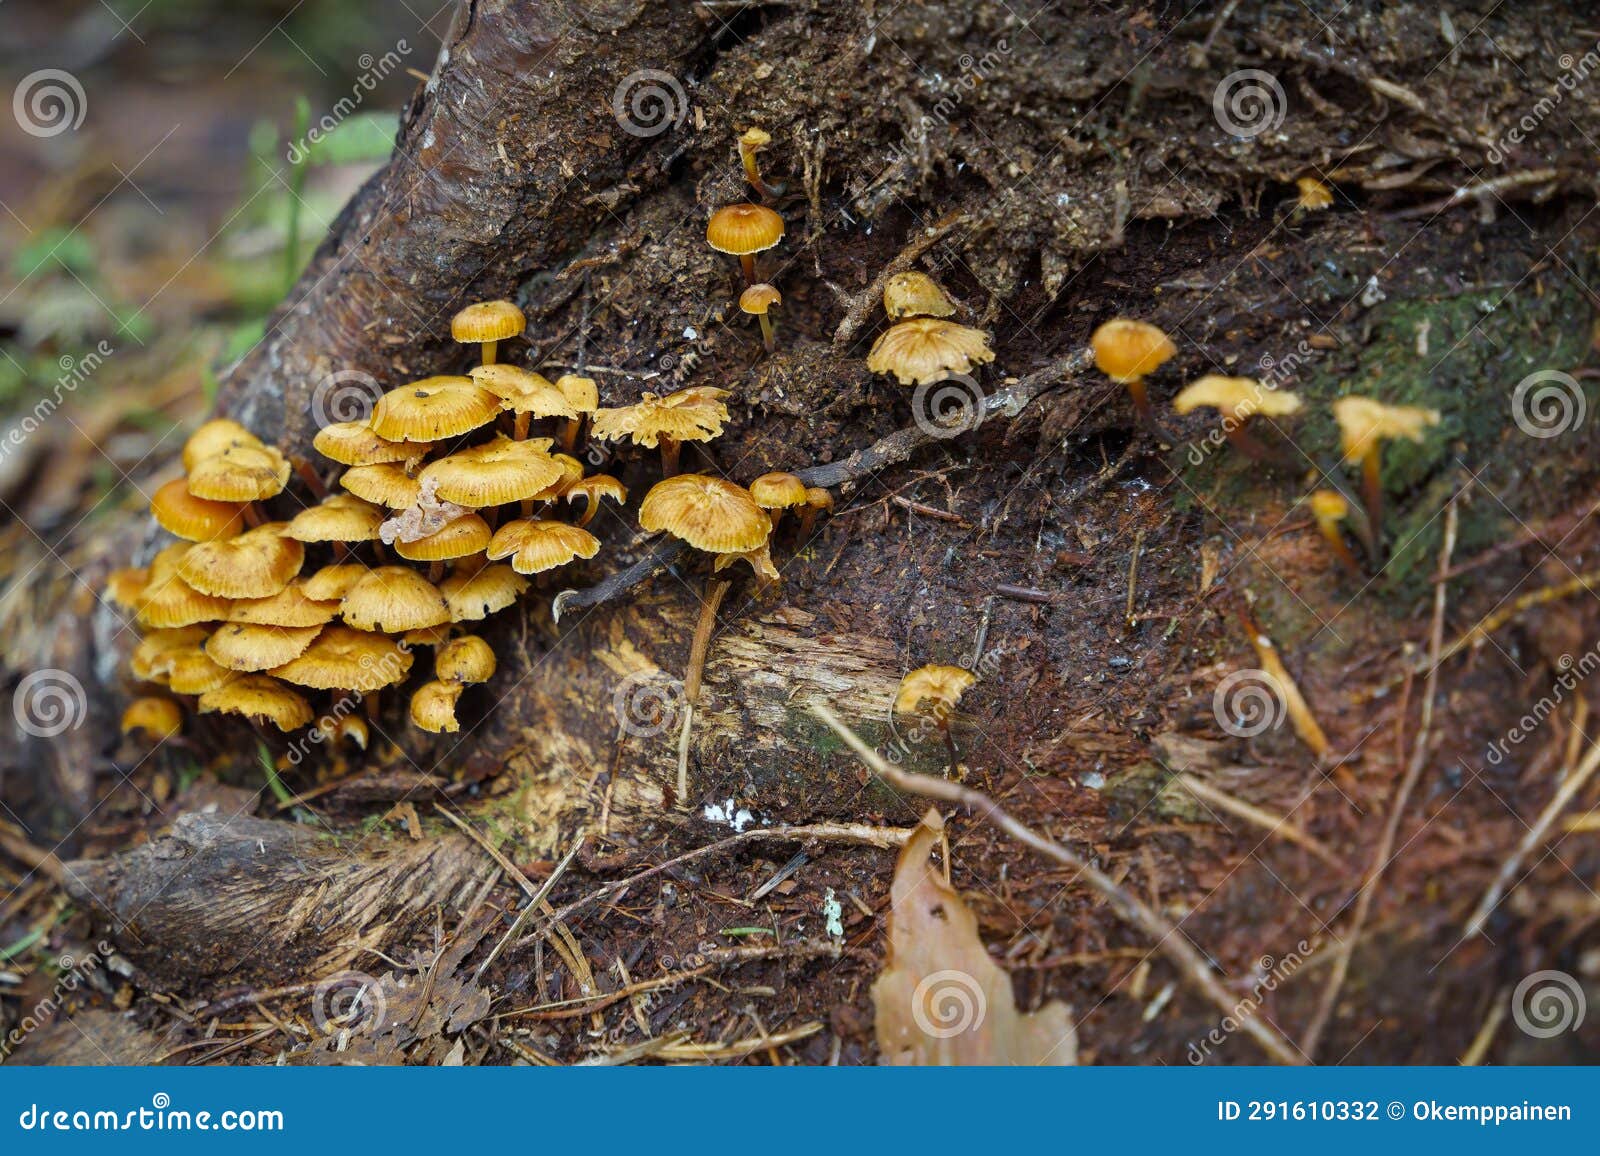 group of yellow mushroom (xeromphalina campanella